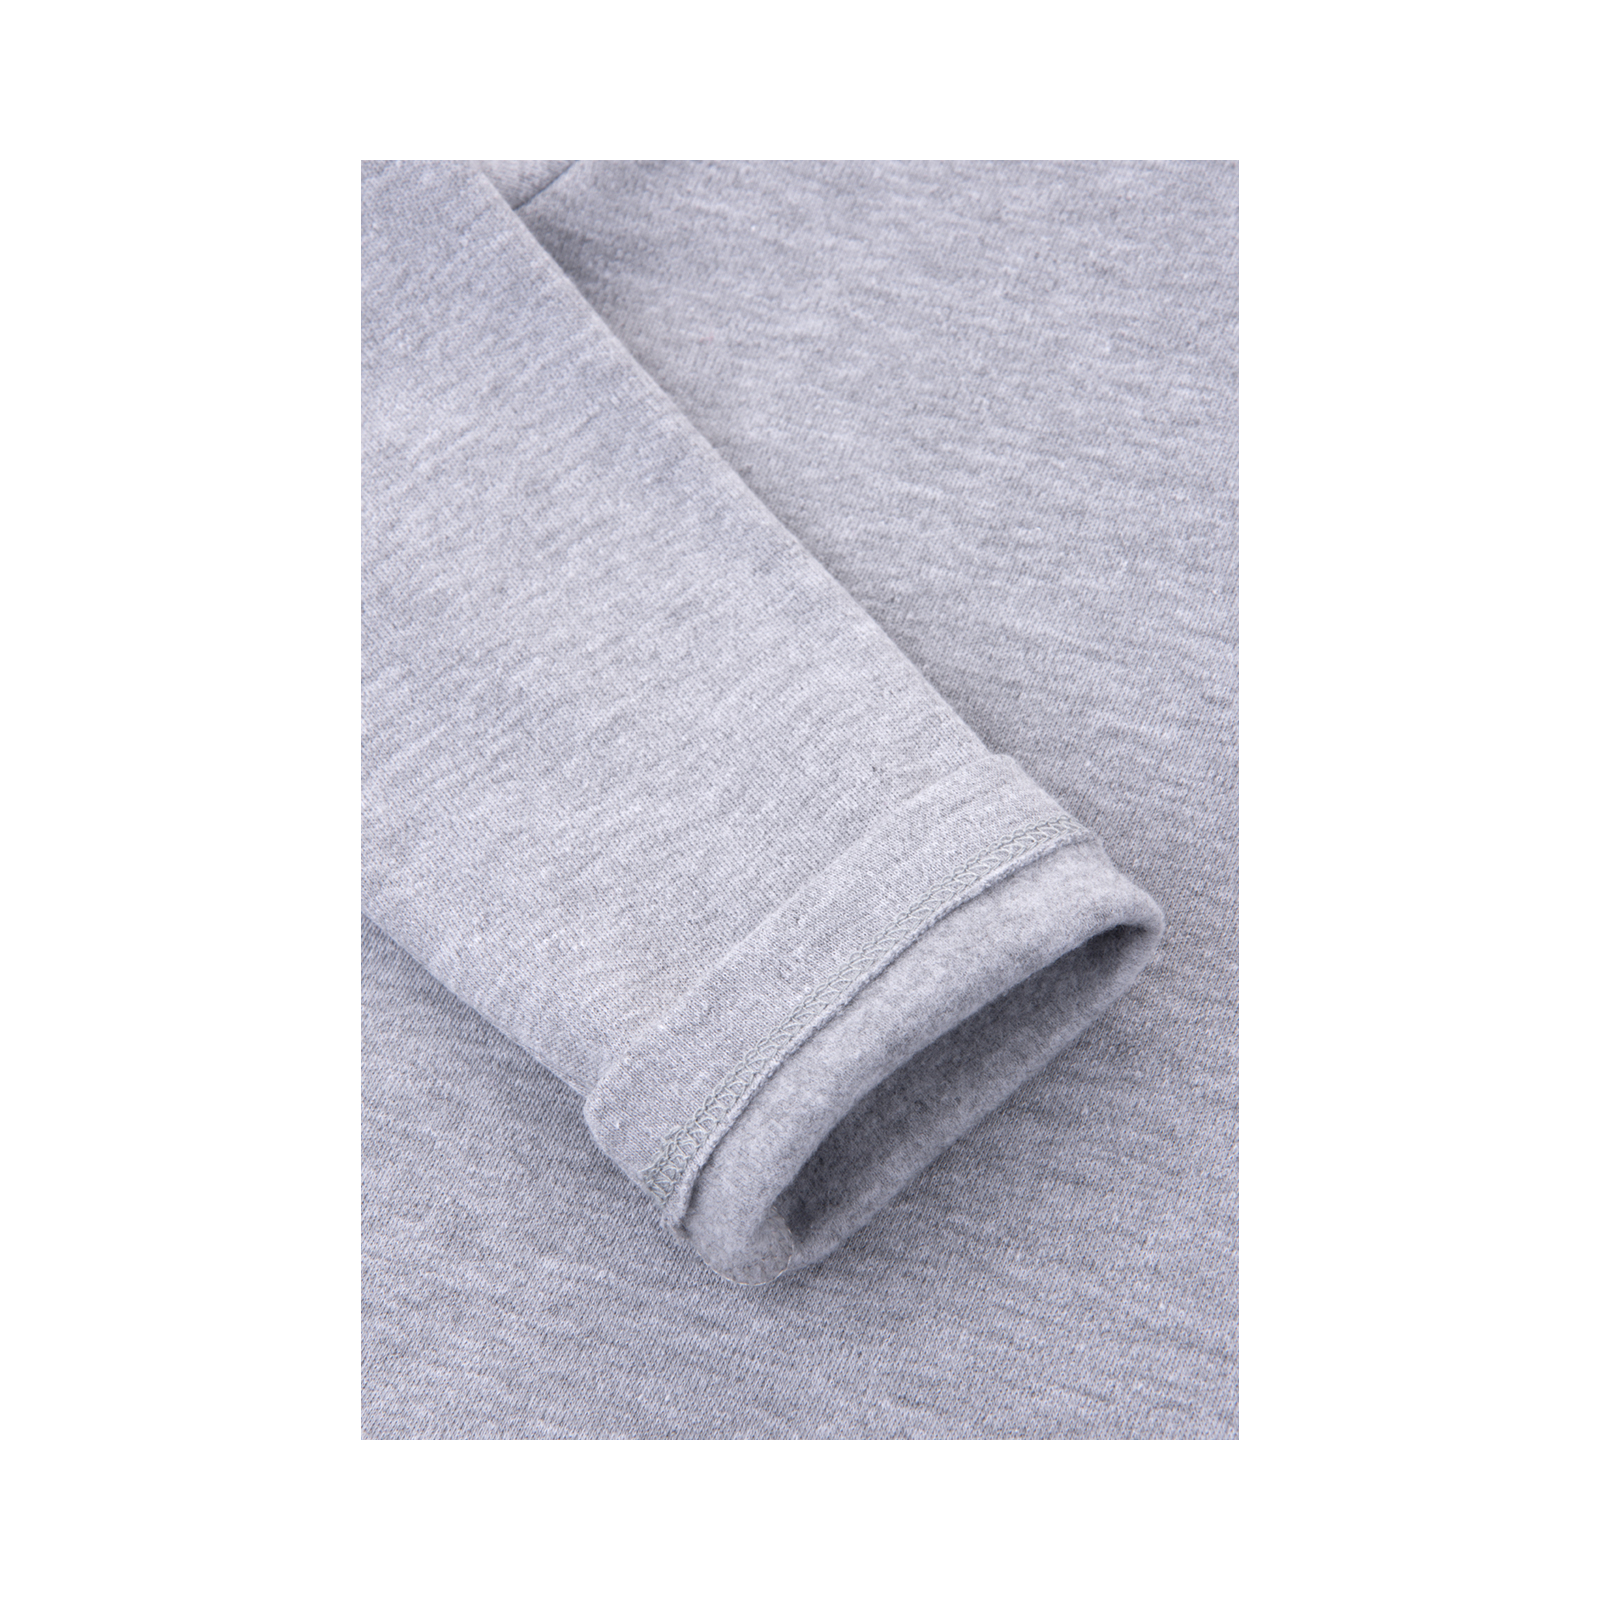 Кофта Lovetti водолазка серая меланжевая (1013-134-gray) изображение 4